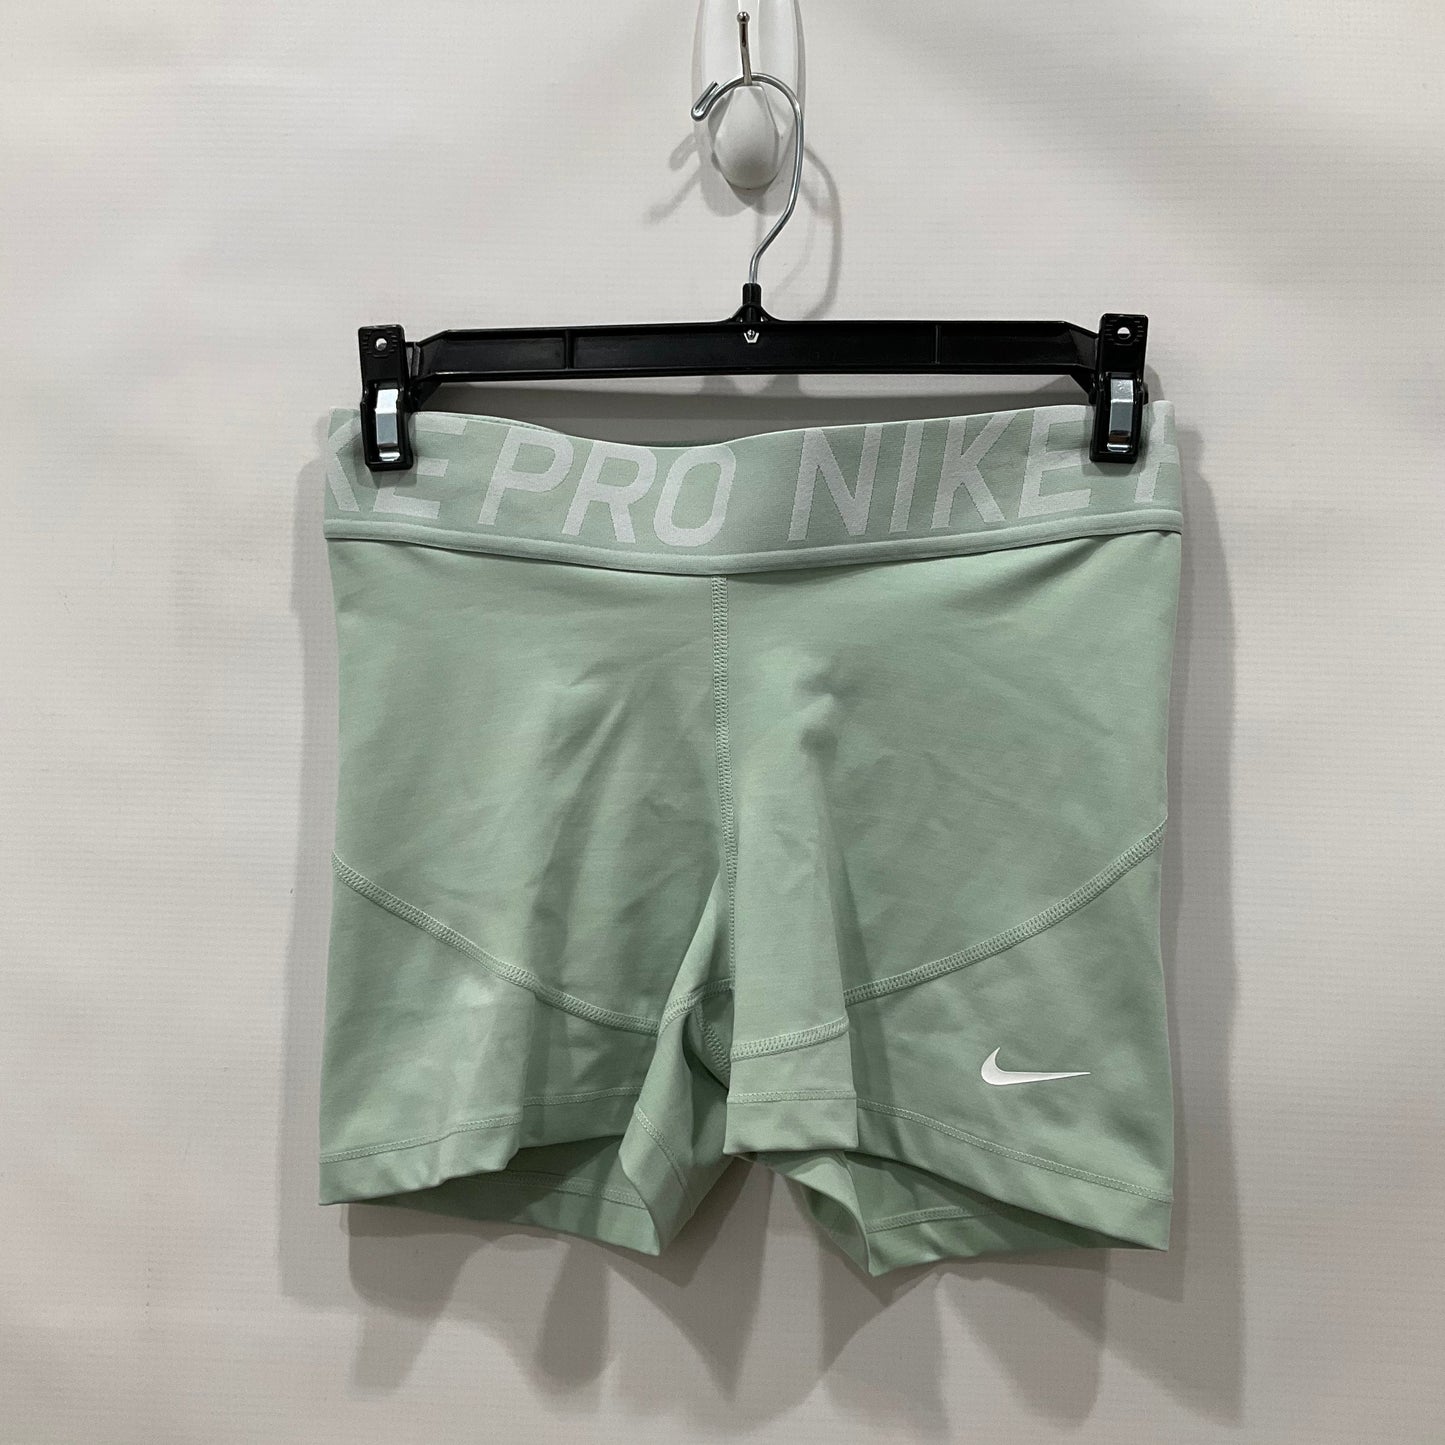 Turquoise Athletic Shorts Nike Apparel, Size M